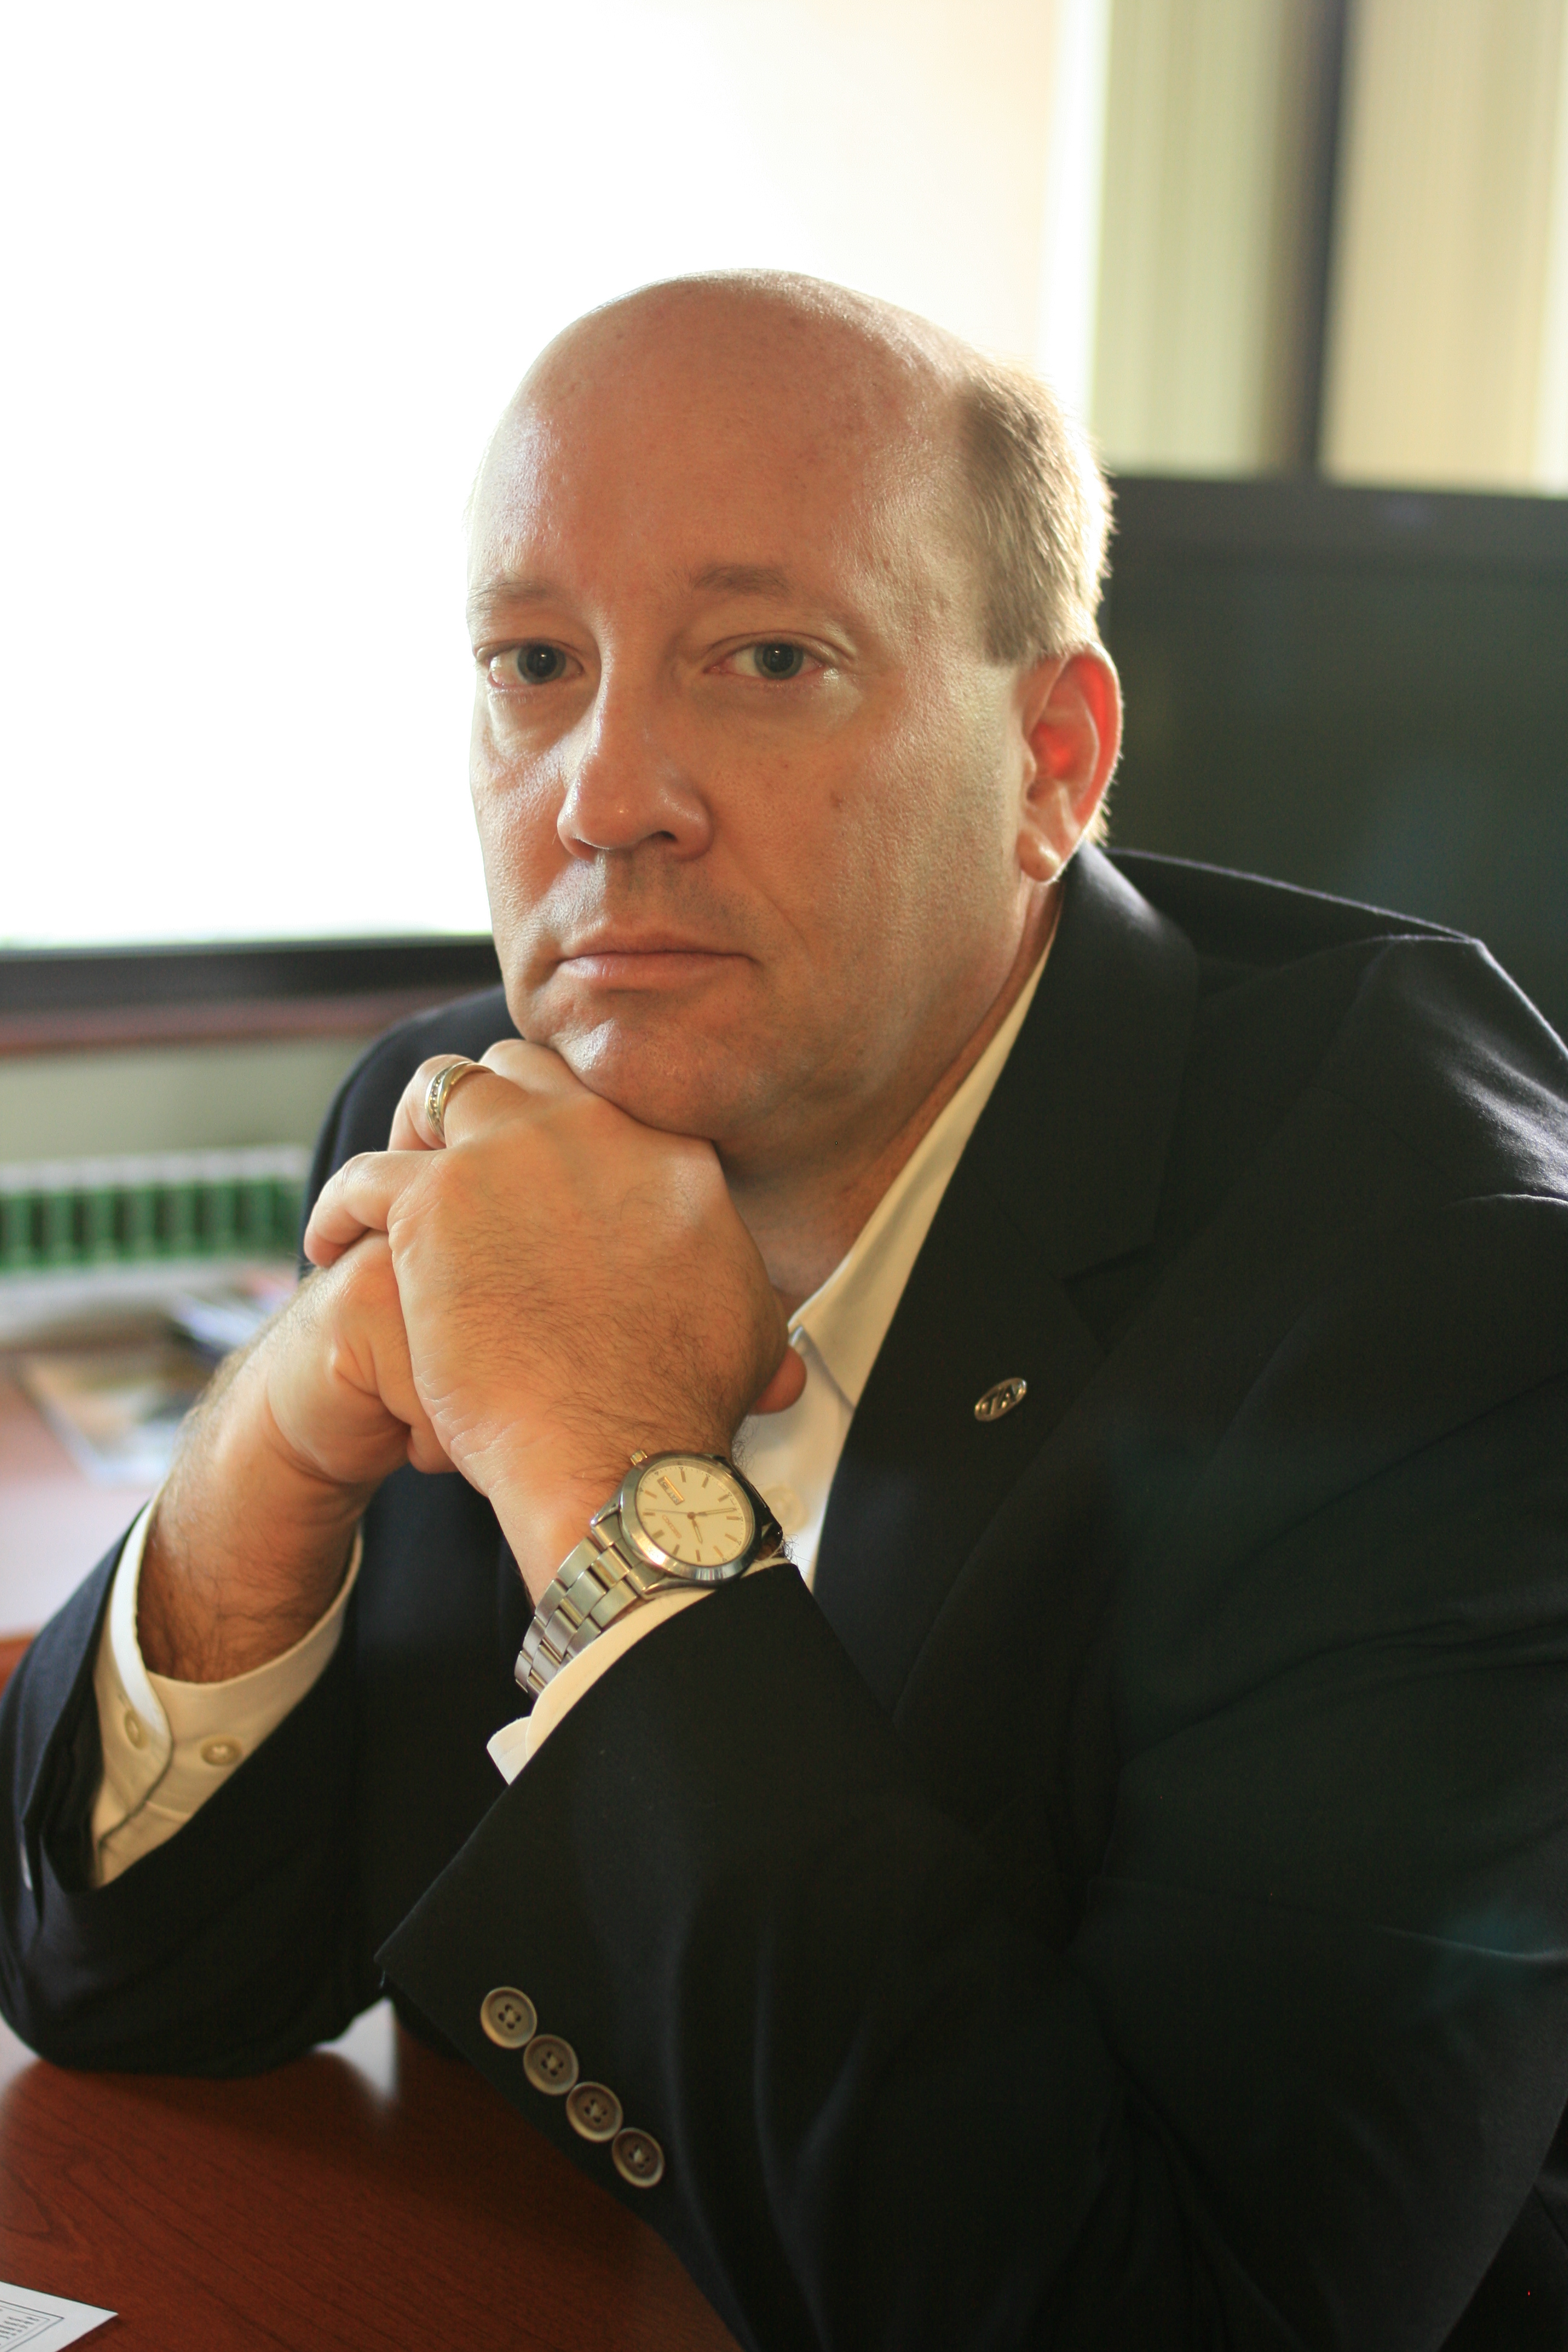  Fred Yentz, CEO of Telit IoT Platforms